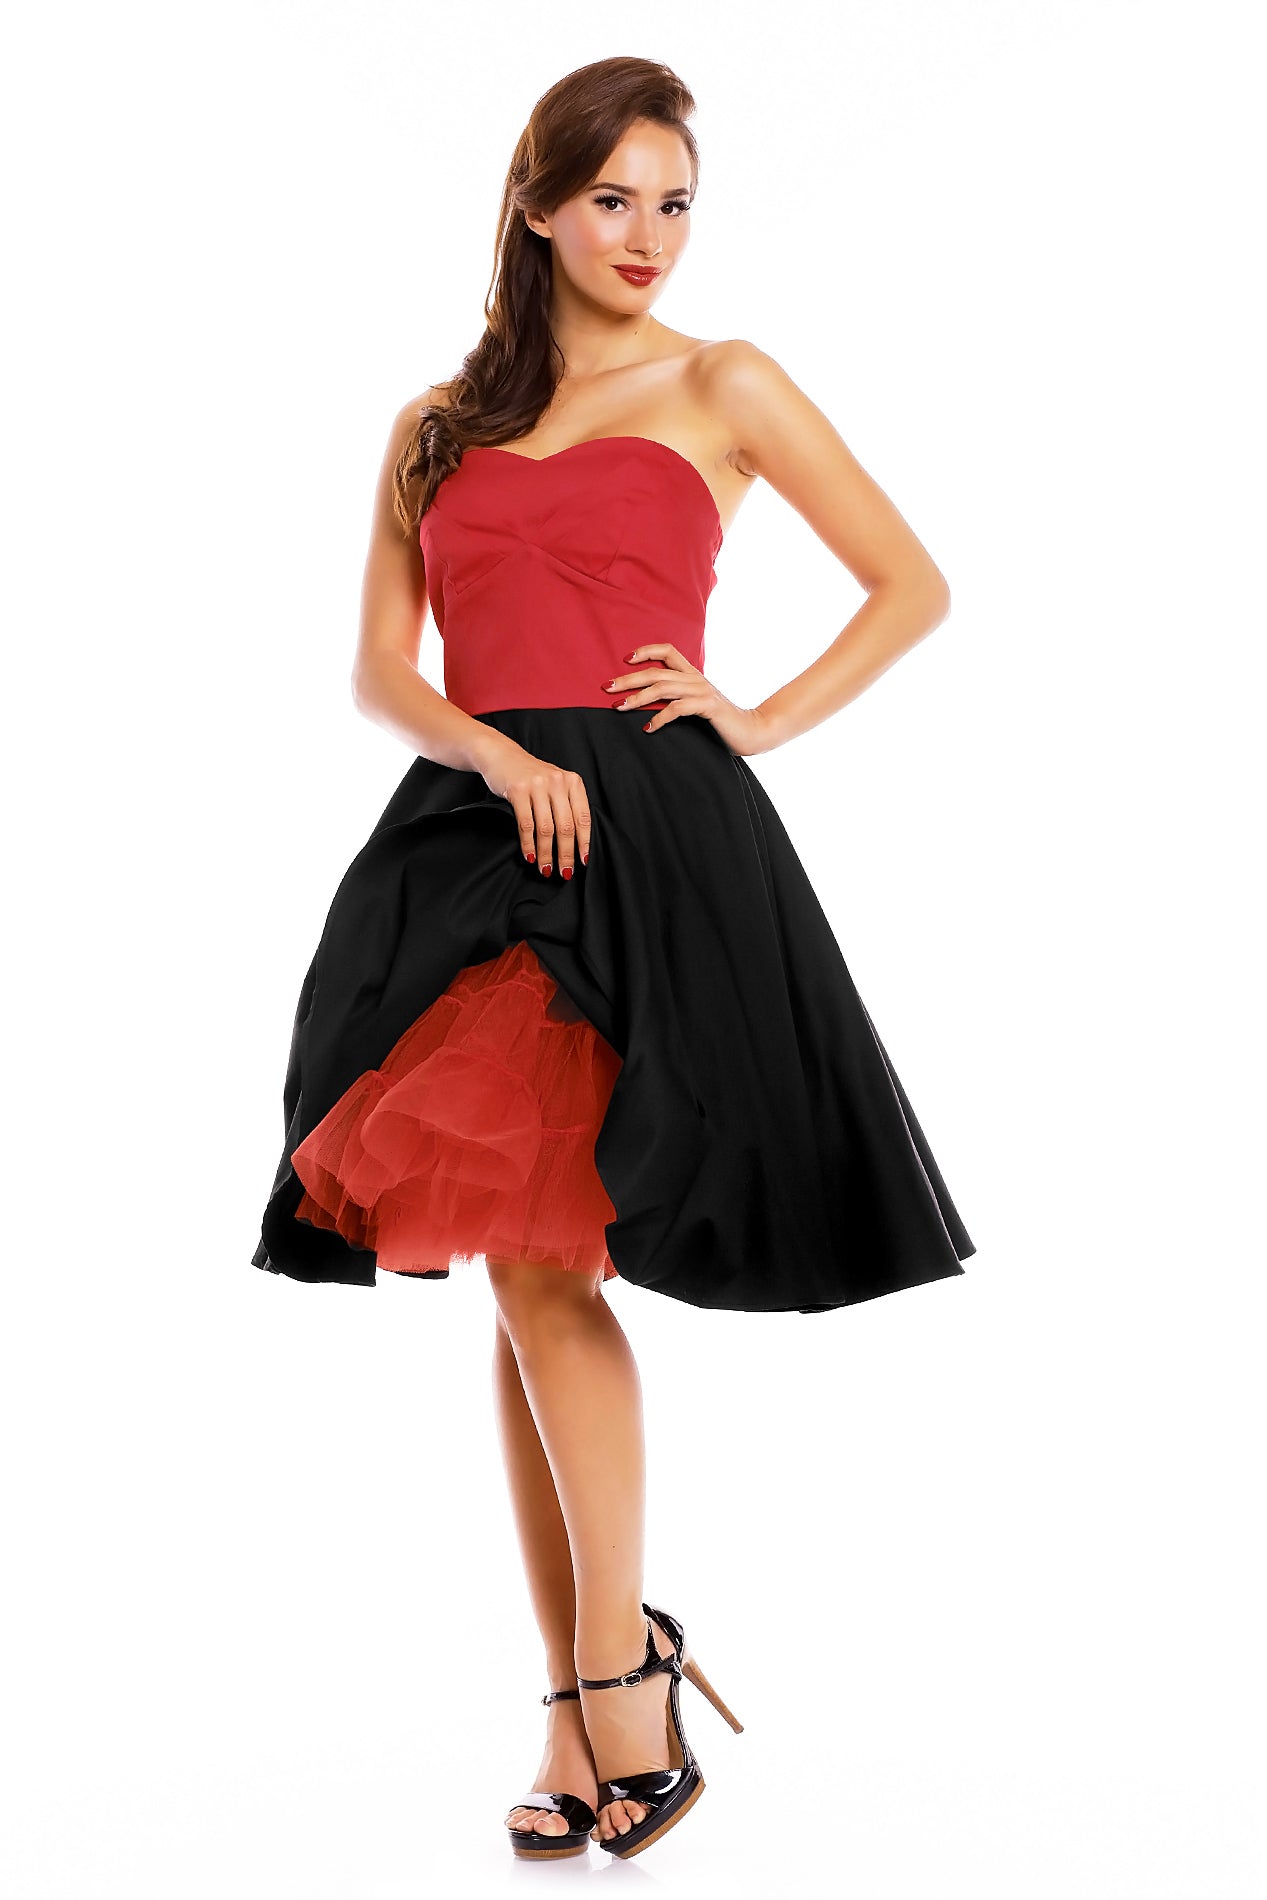 Retro Rockabilly Dress in Black-Red